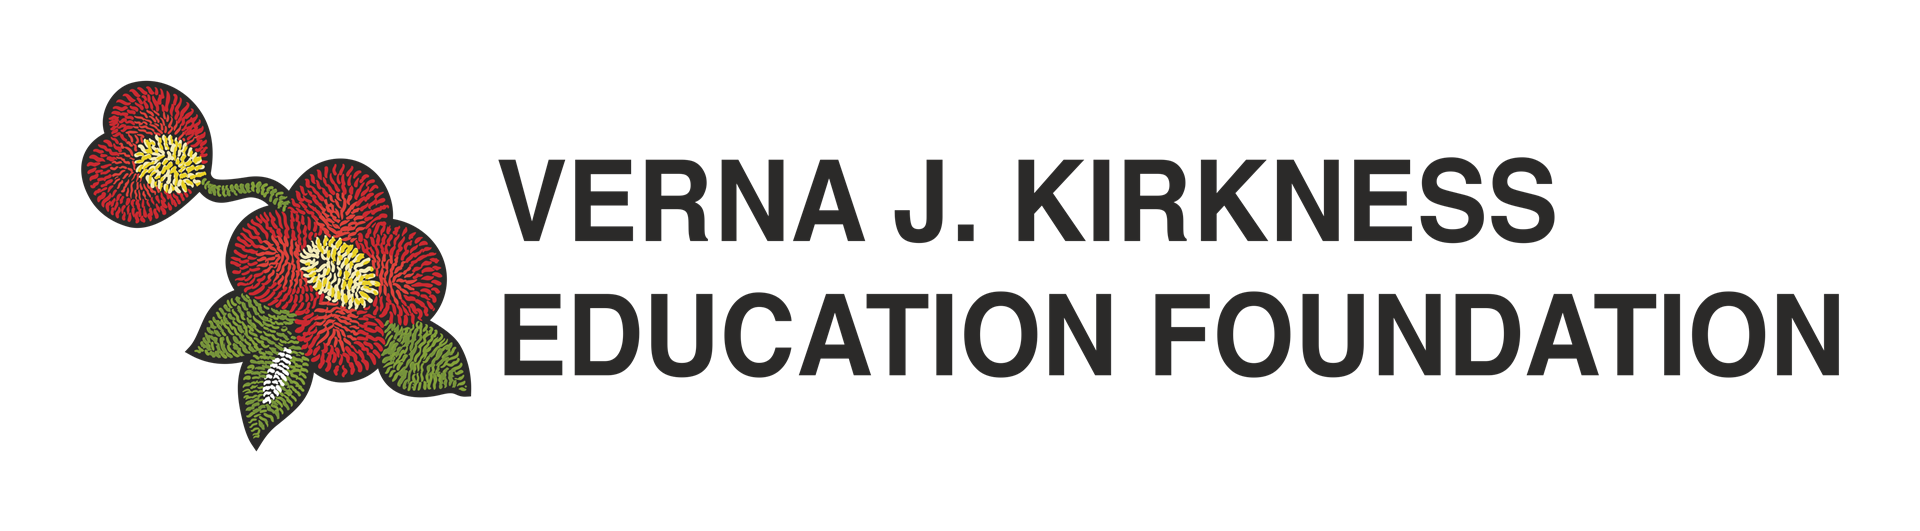 The Verna J. Kirkness Education Foundation logo